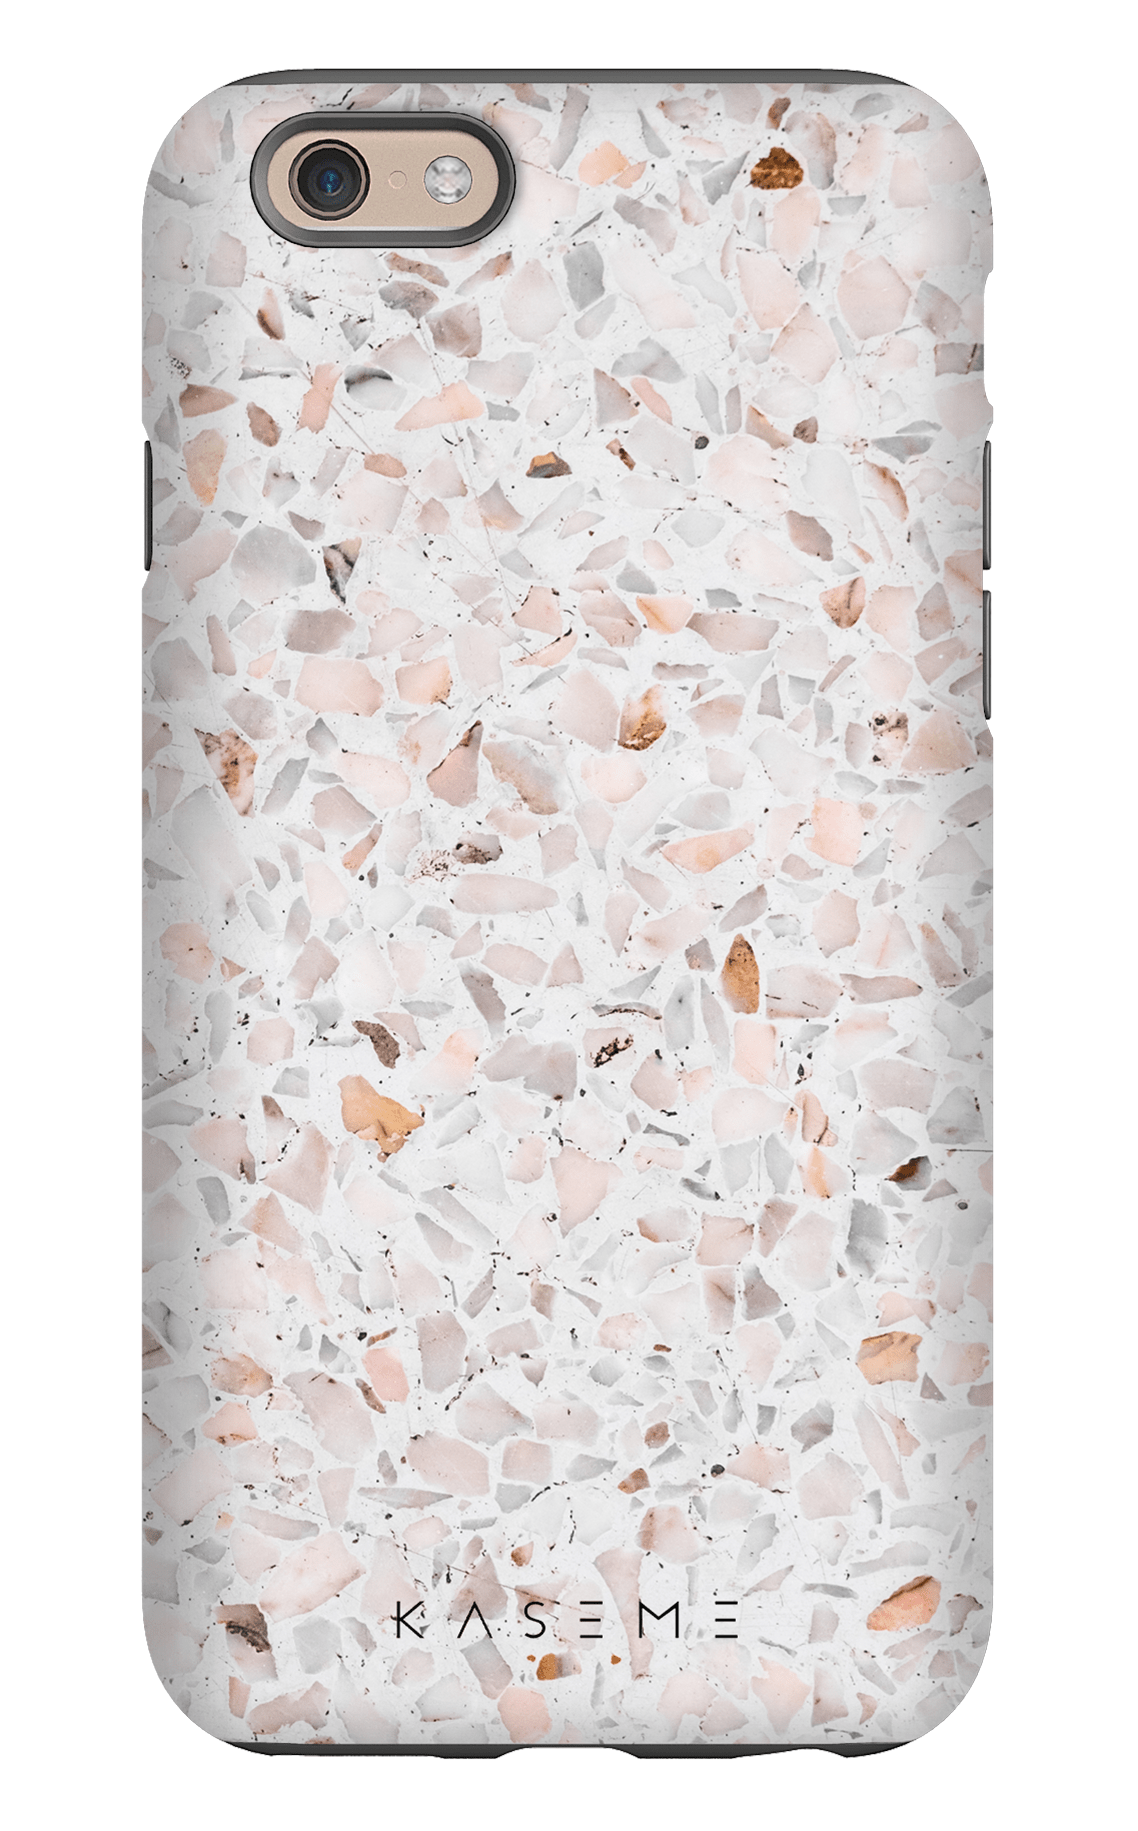 Frozen stone - iPhone 6/6s